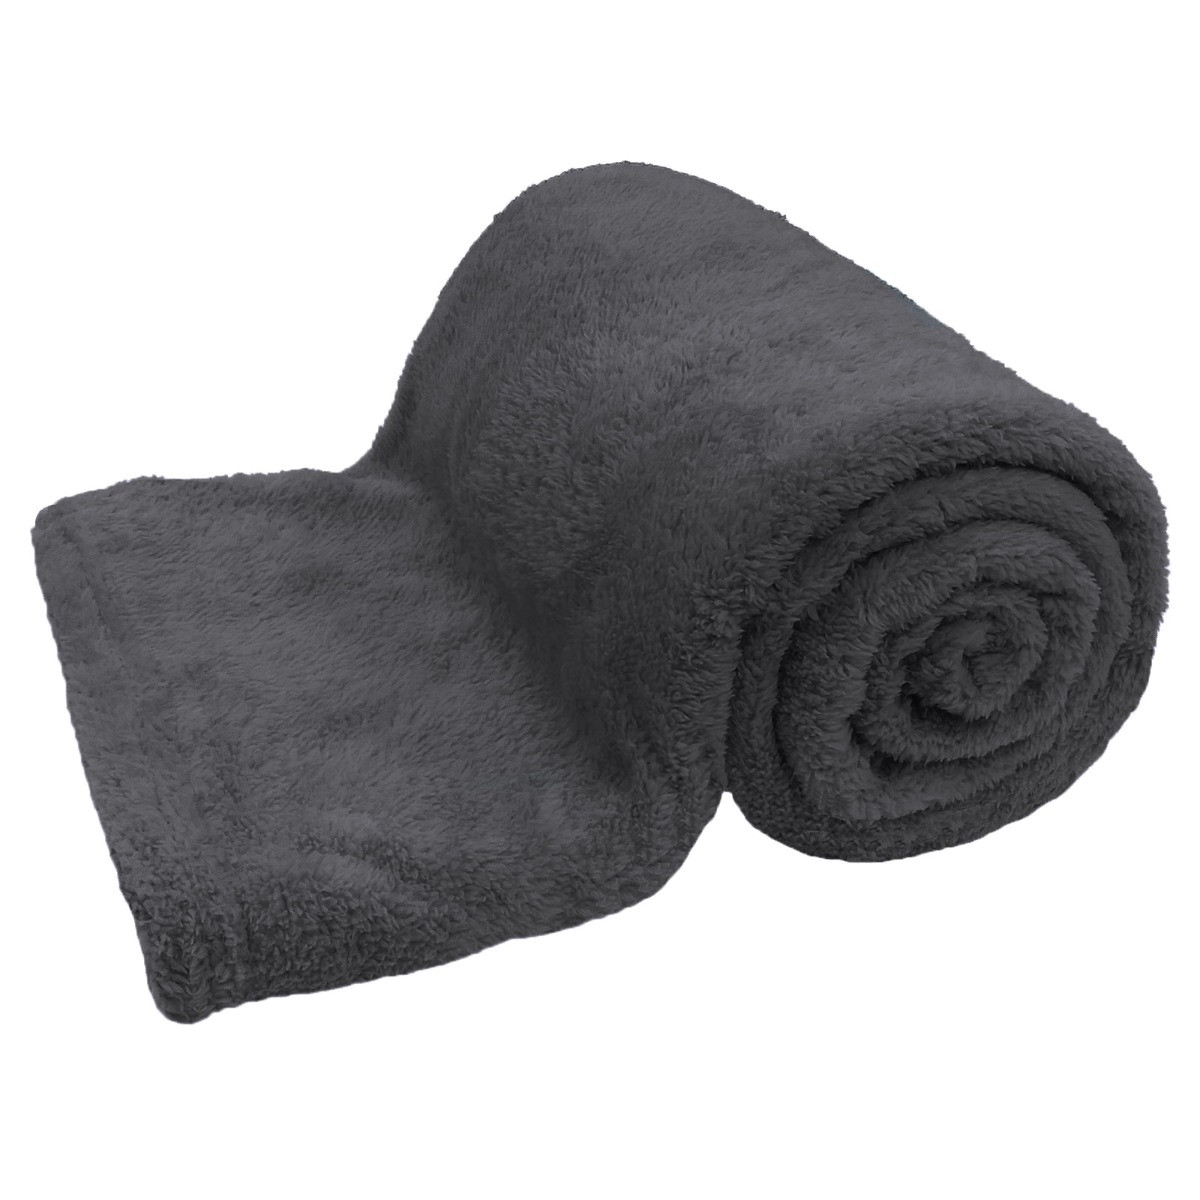 Brentfords Teddy Fleece Blanket Soft Throw Over Bed, Charcoal Grey - 150 x 200cm>